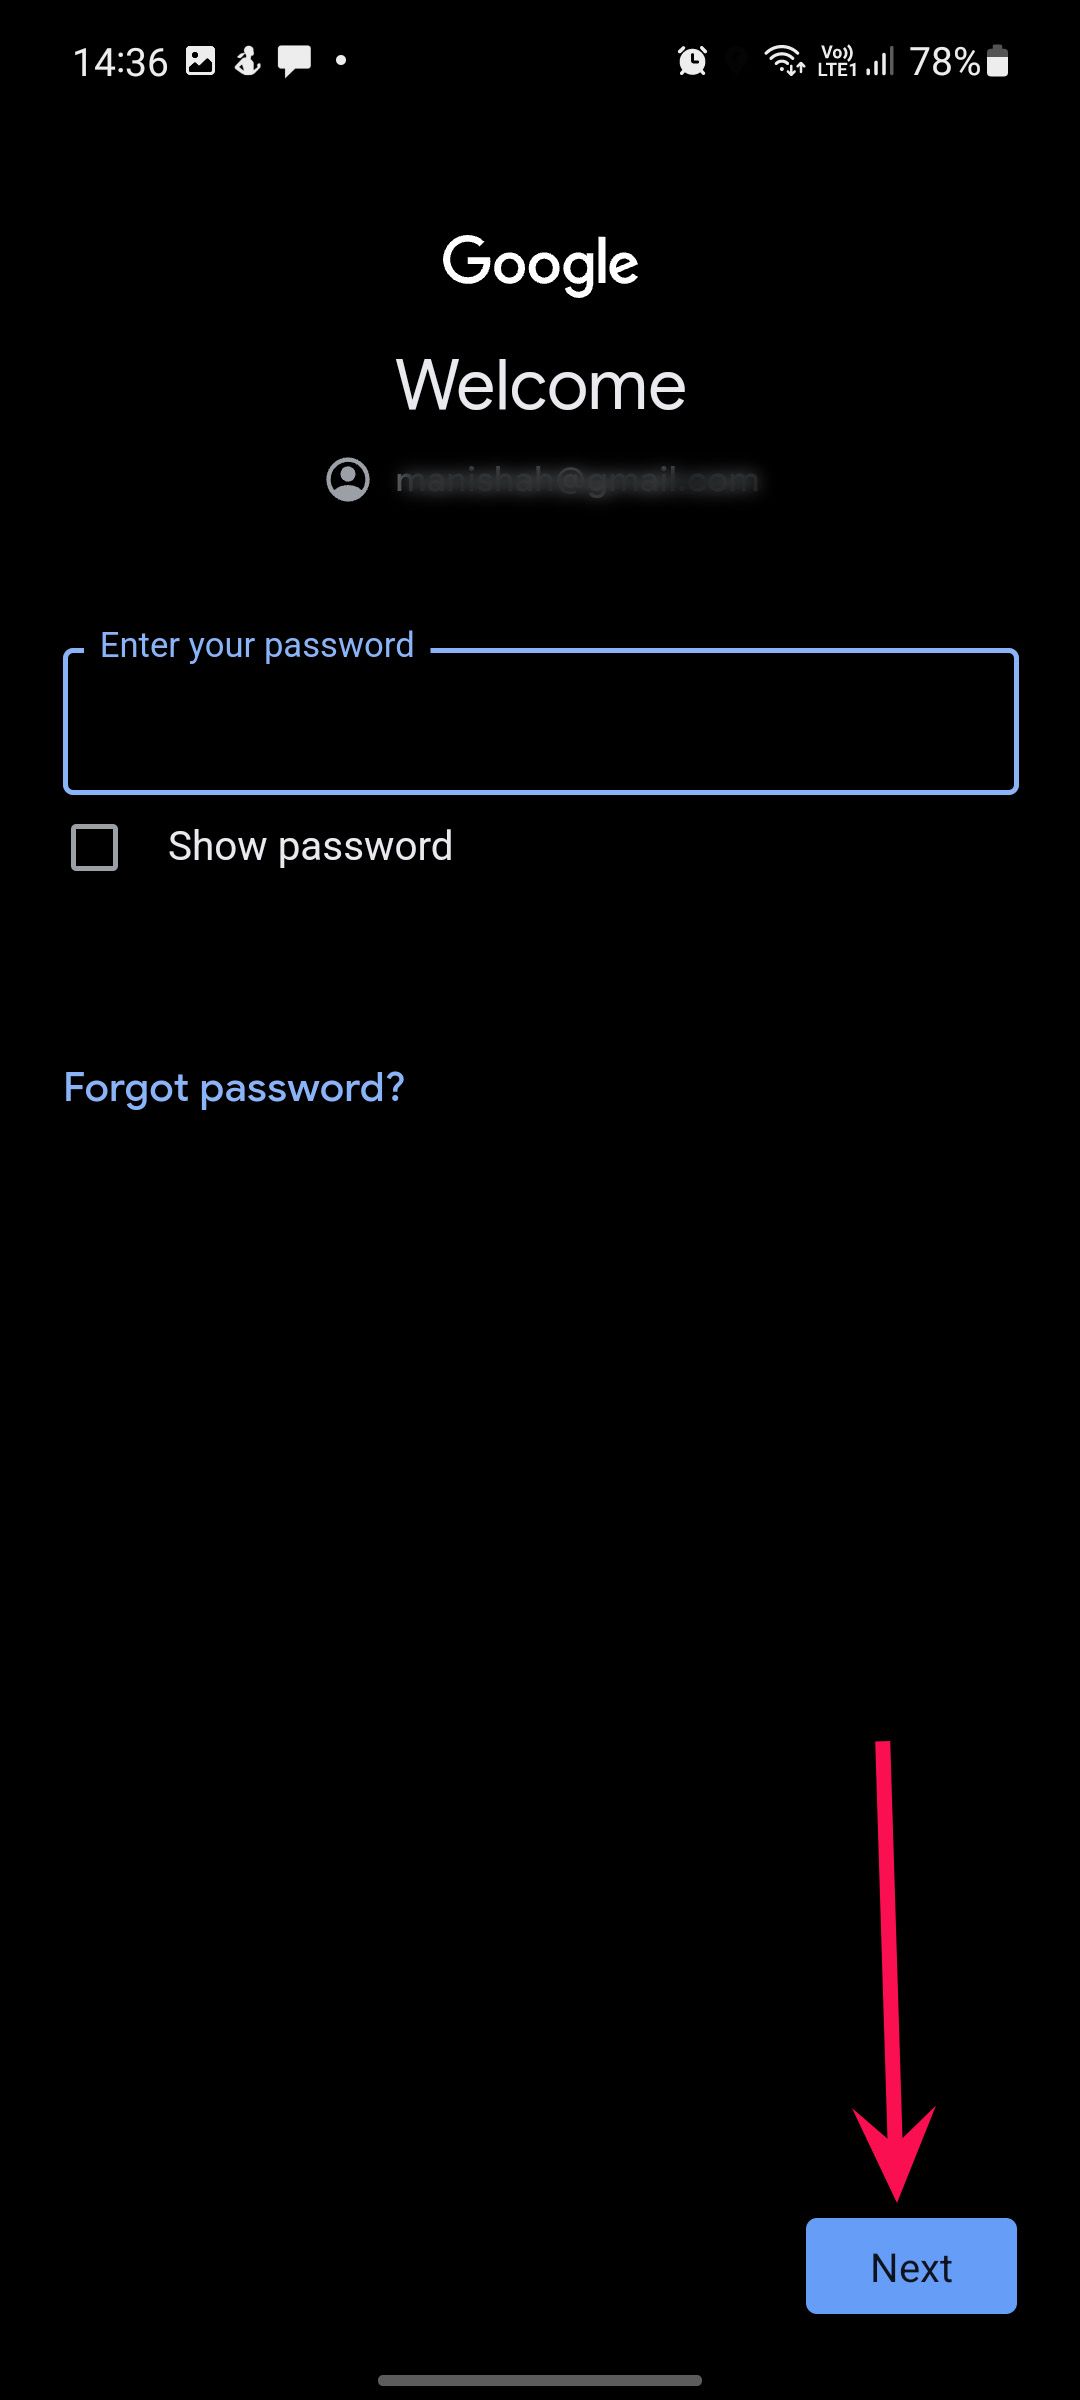 android phone screenshot showing enter password window in dark mode